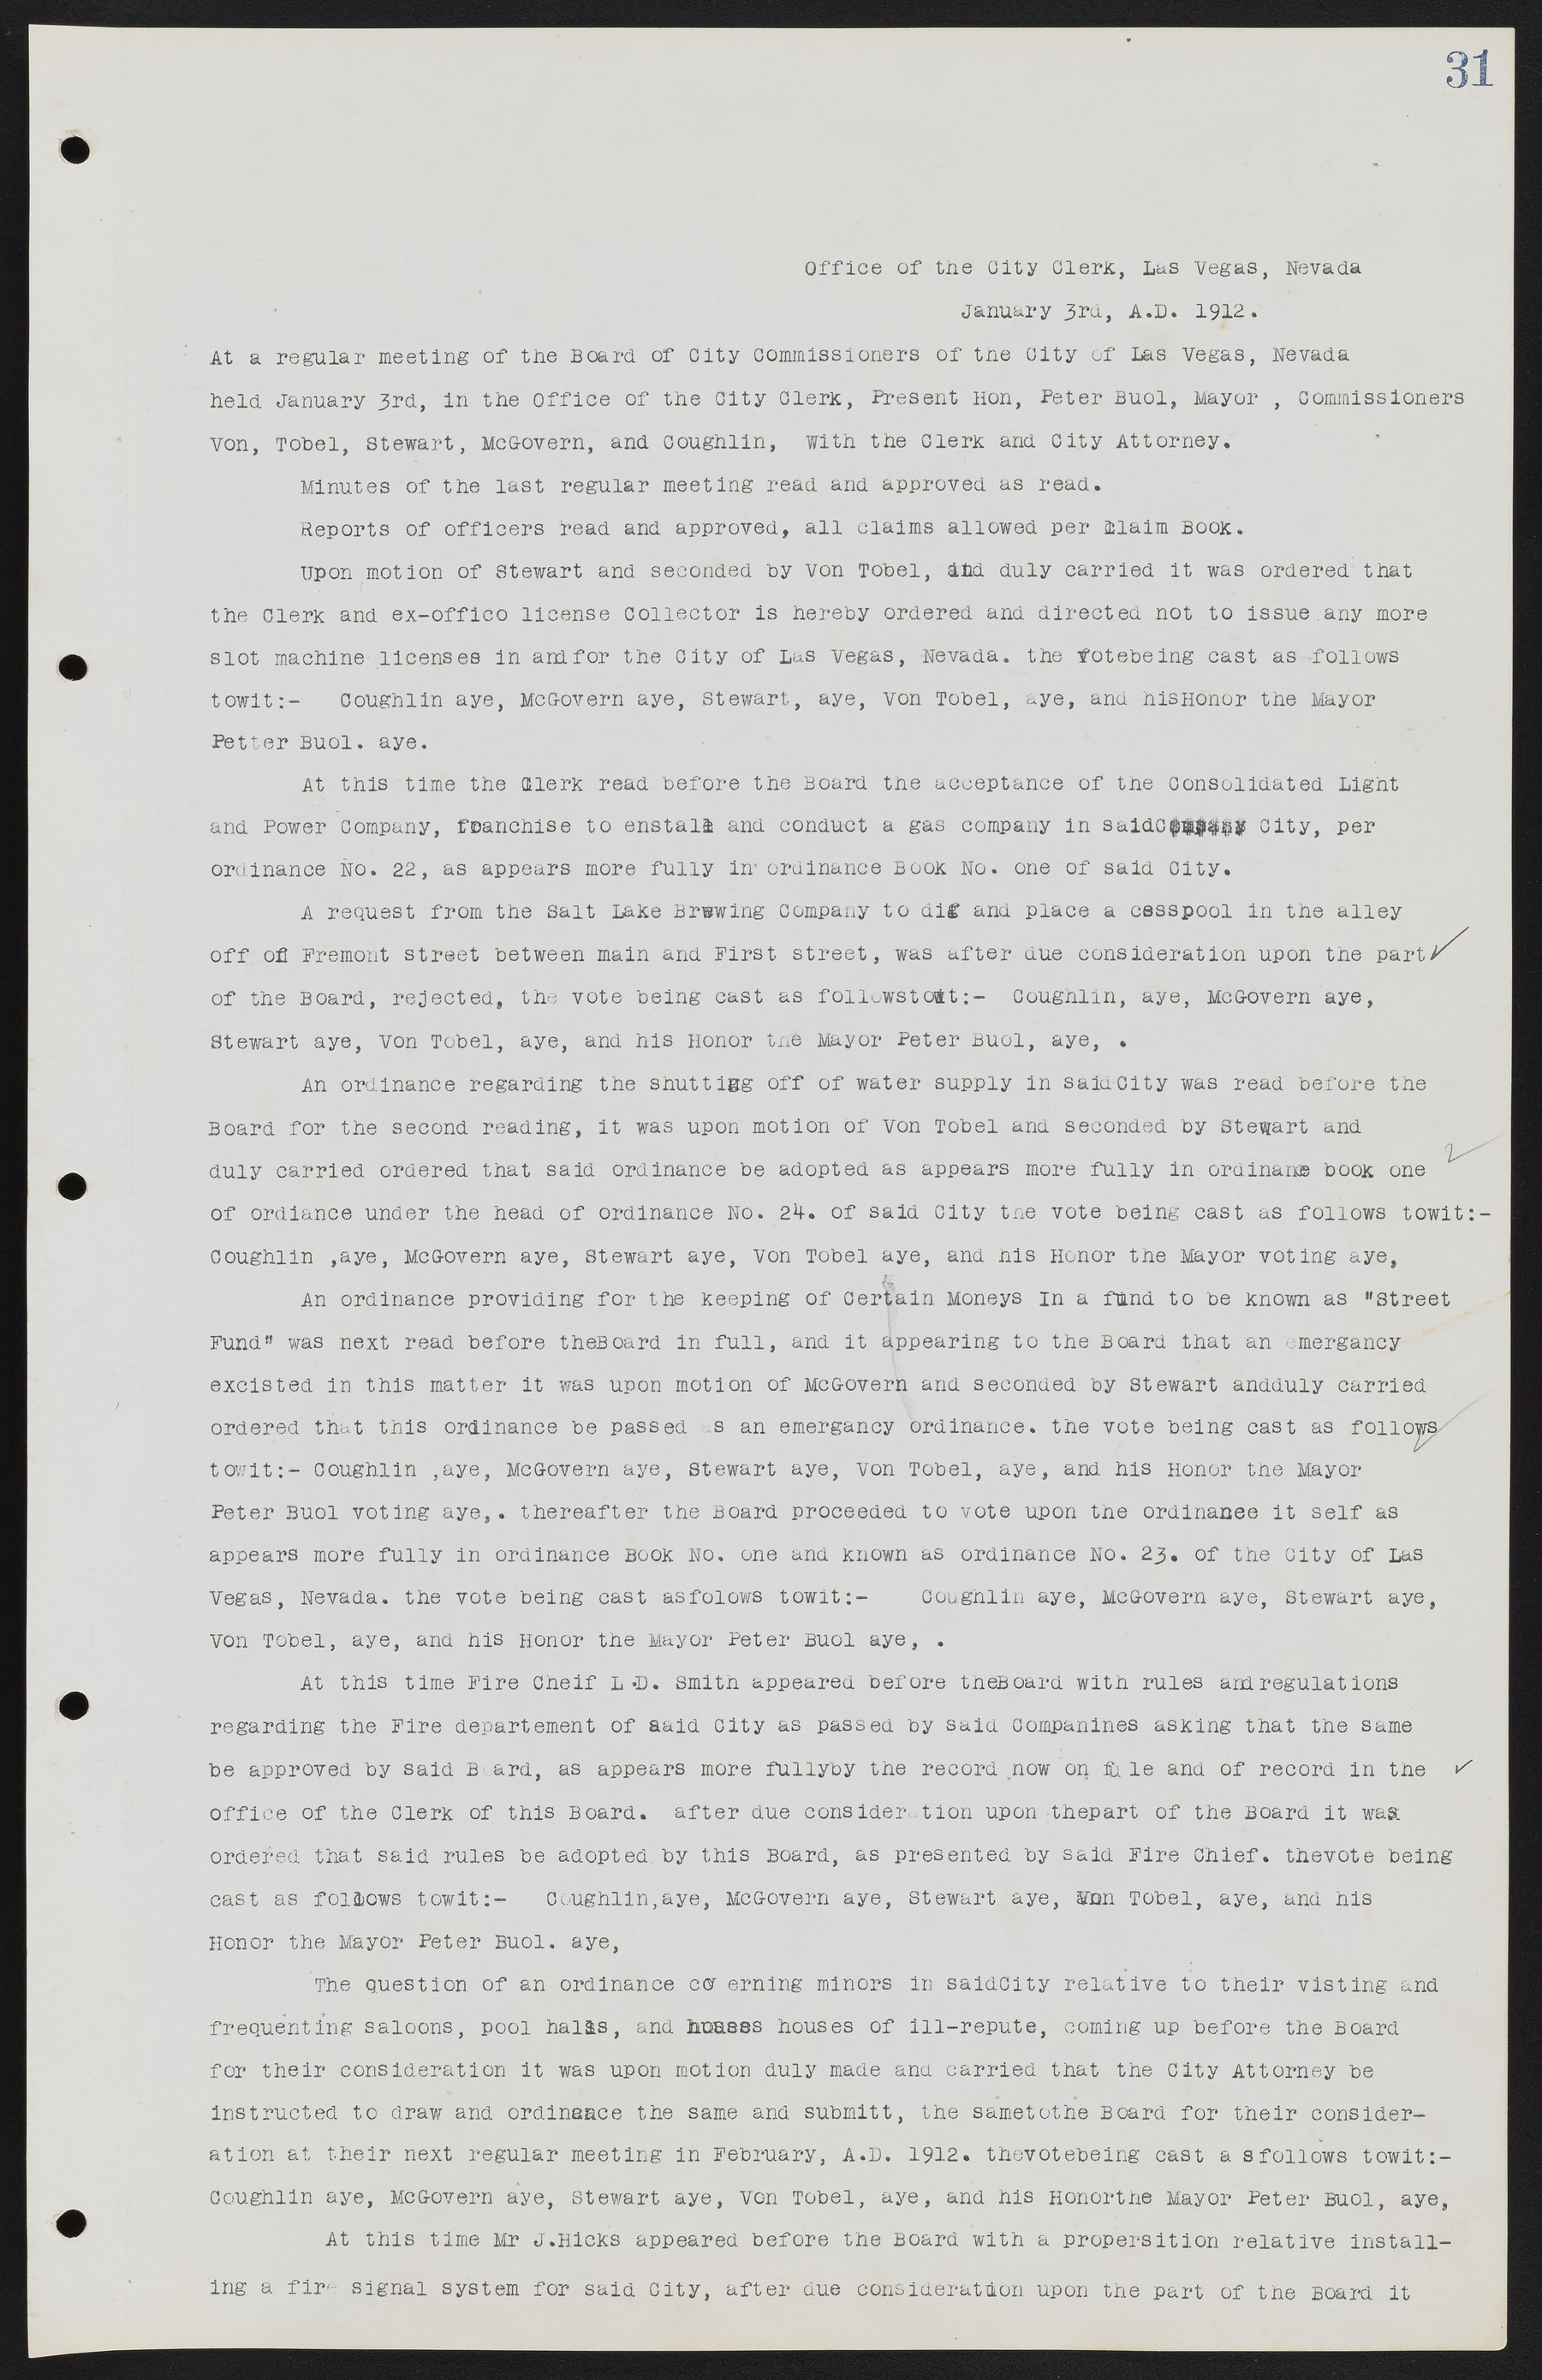 Las Vegas City Commission Minutes, June 22, 1911 to February 7, 1922, lvc000001-45